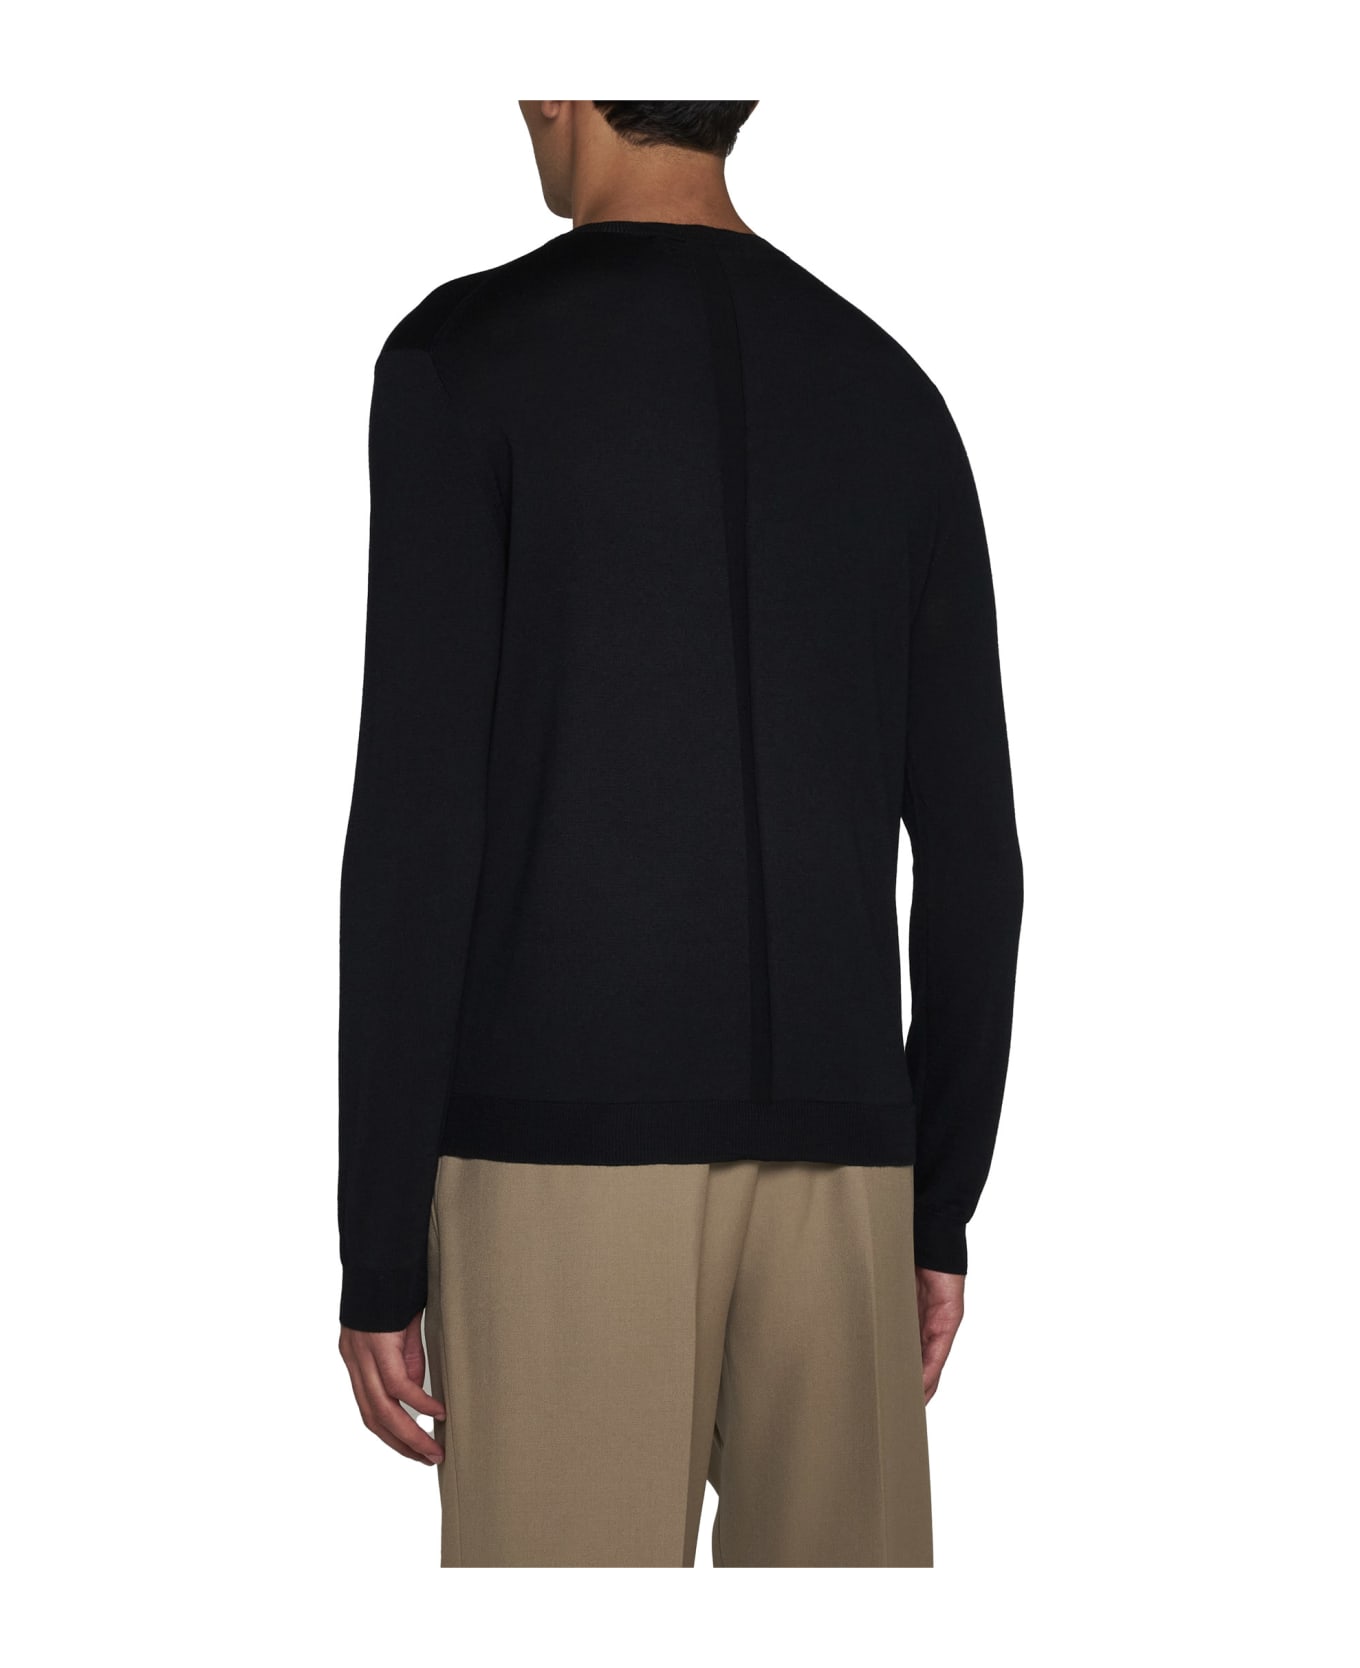 Low Brand Sweater - Jet black